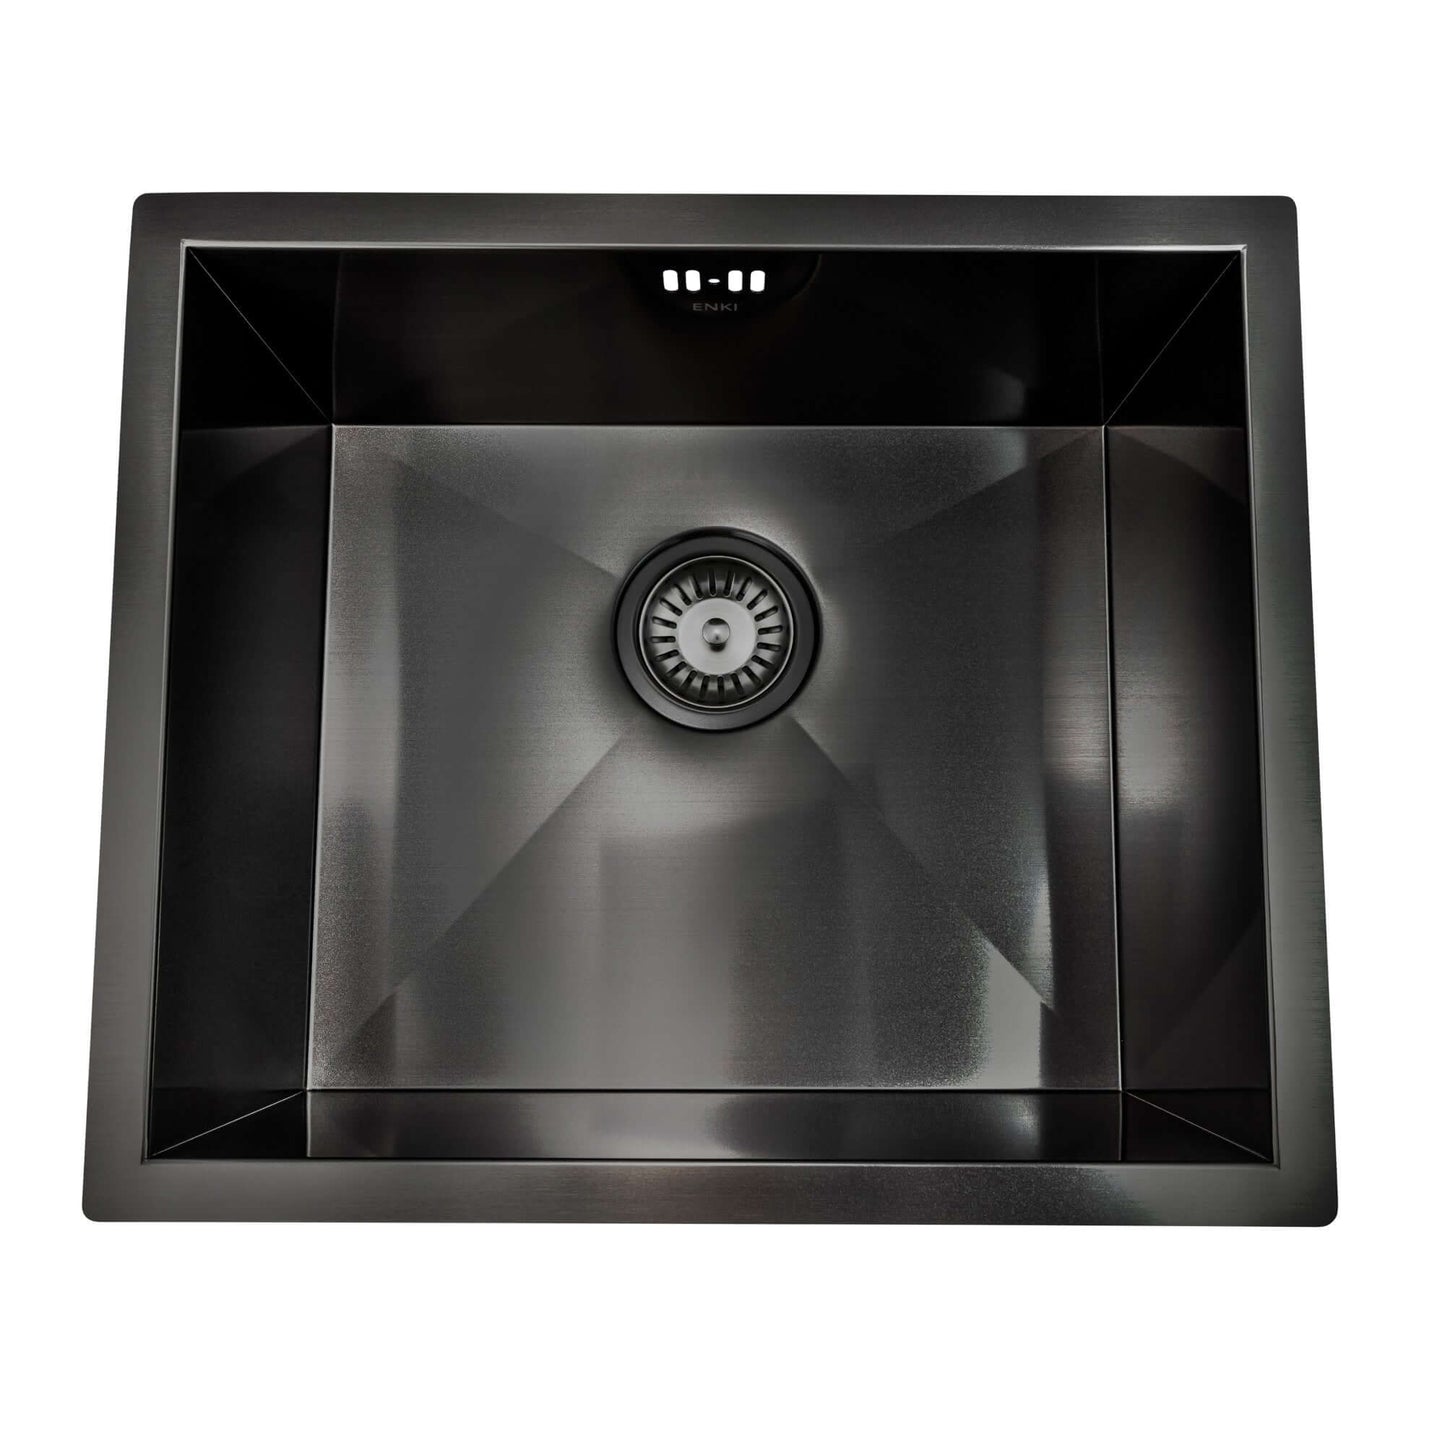 Axia 500mm x 430mm 1.0 bowl undermount or topmount kitchen sink with overflow - gunmetal black stainless steel